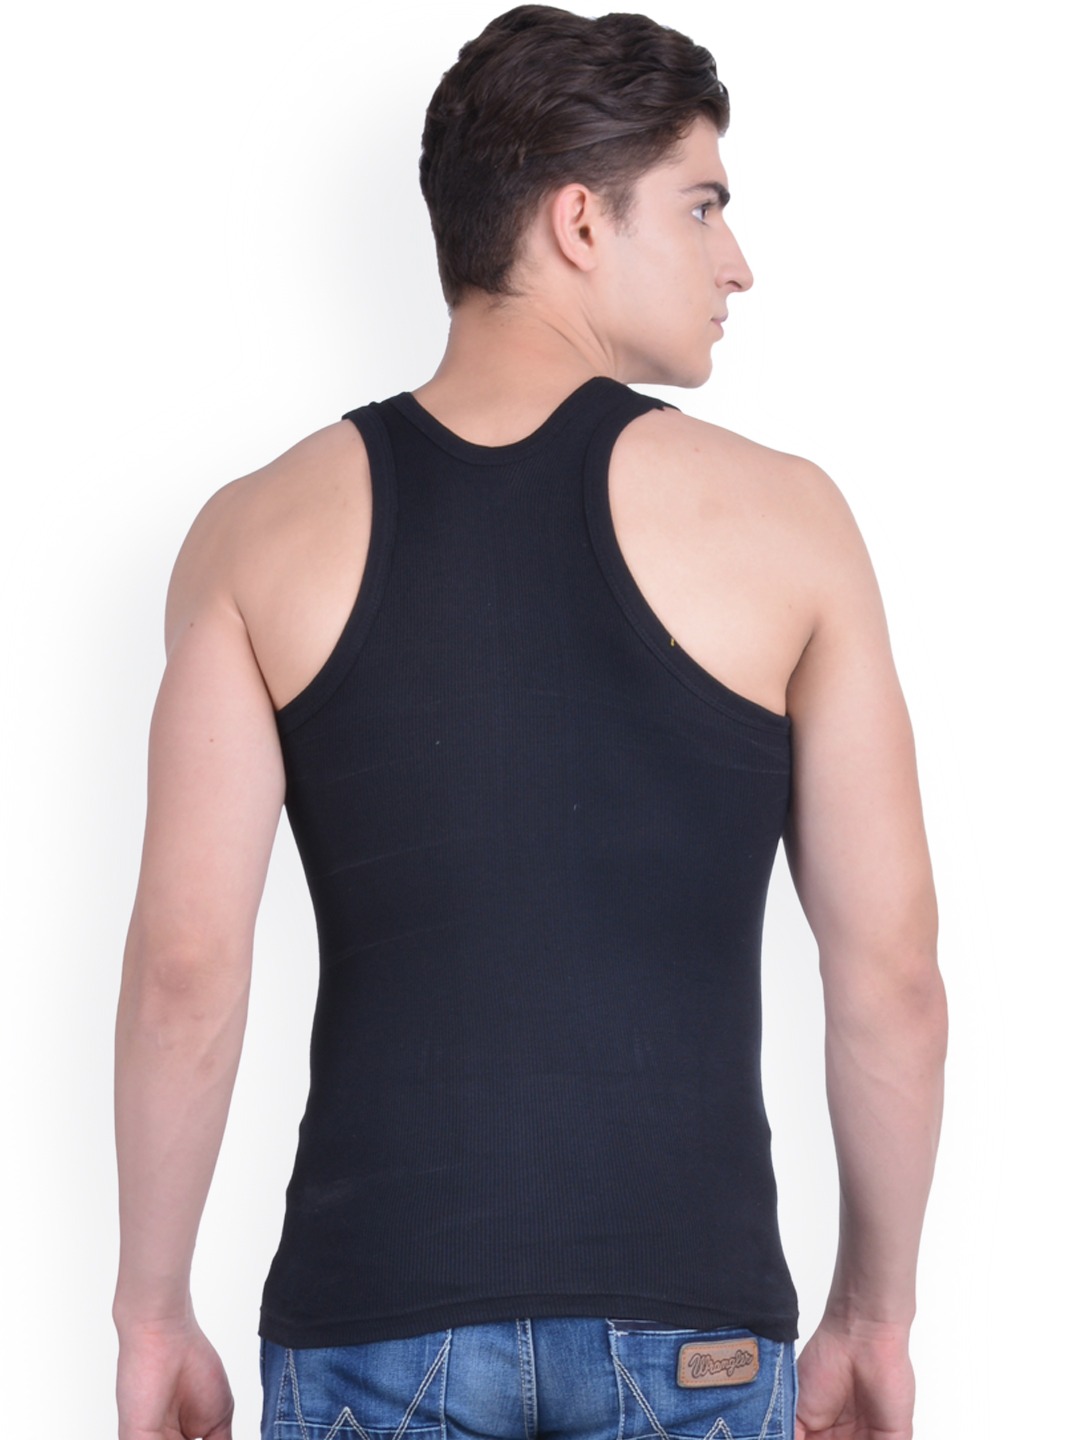 Clothing Innerwear Vests | Dollar Bigboss Pack of 2 Black Innerwear Vests MDVE-04-R1-PO2 - SF33560